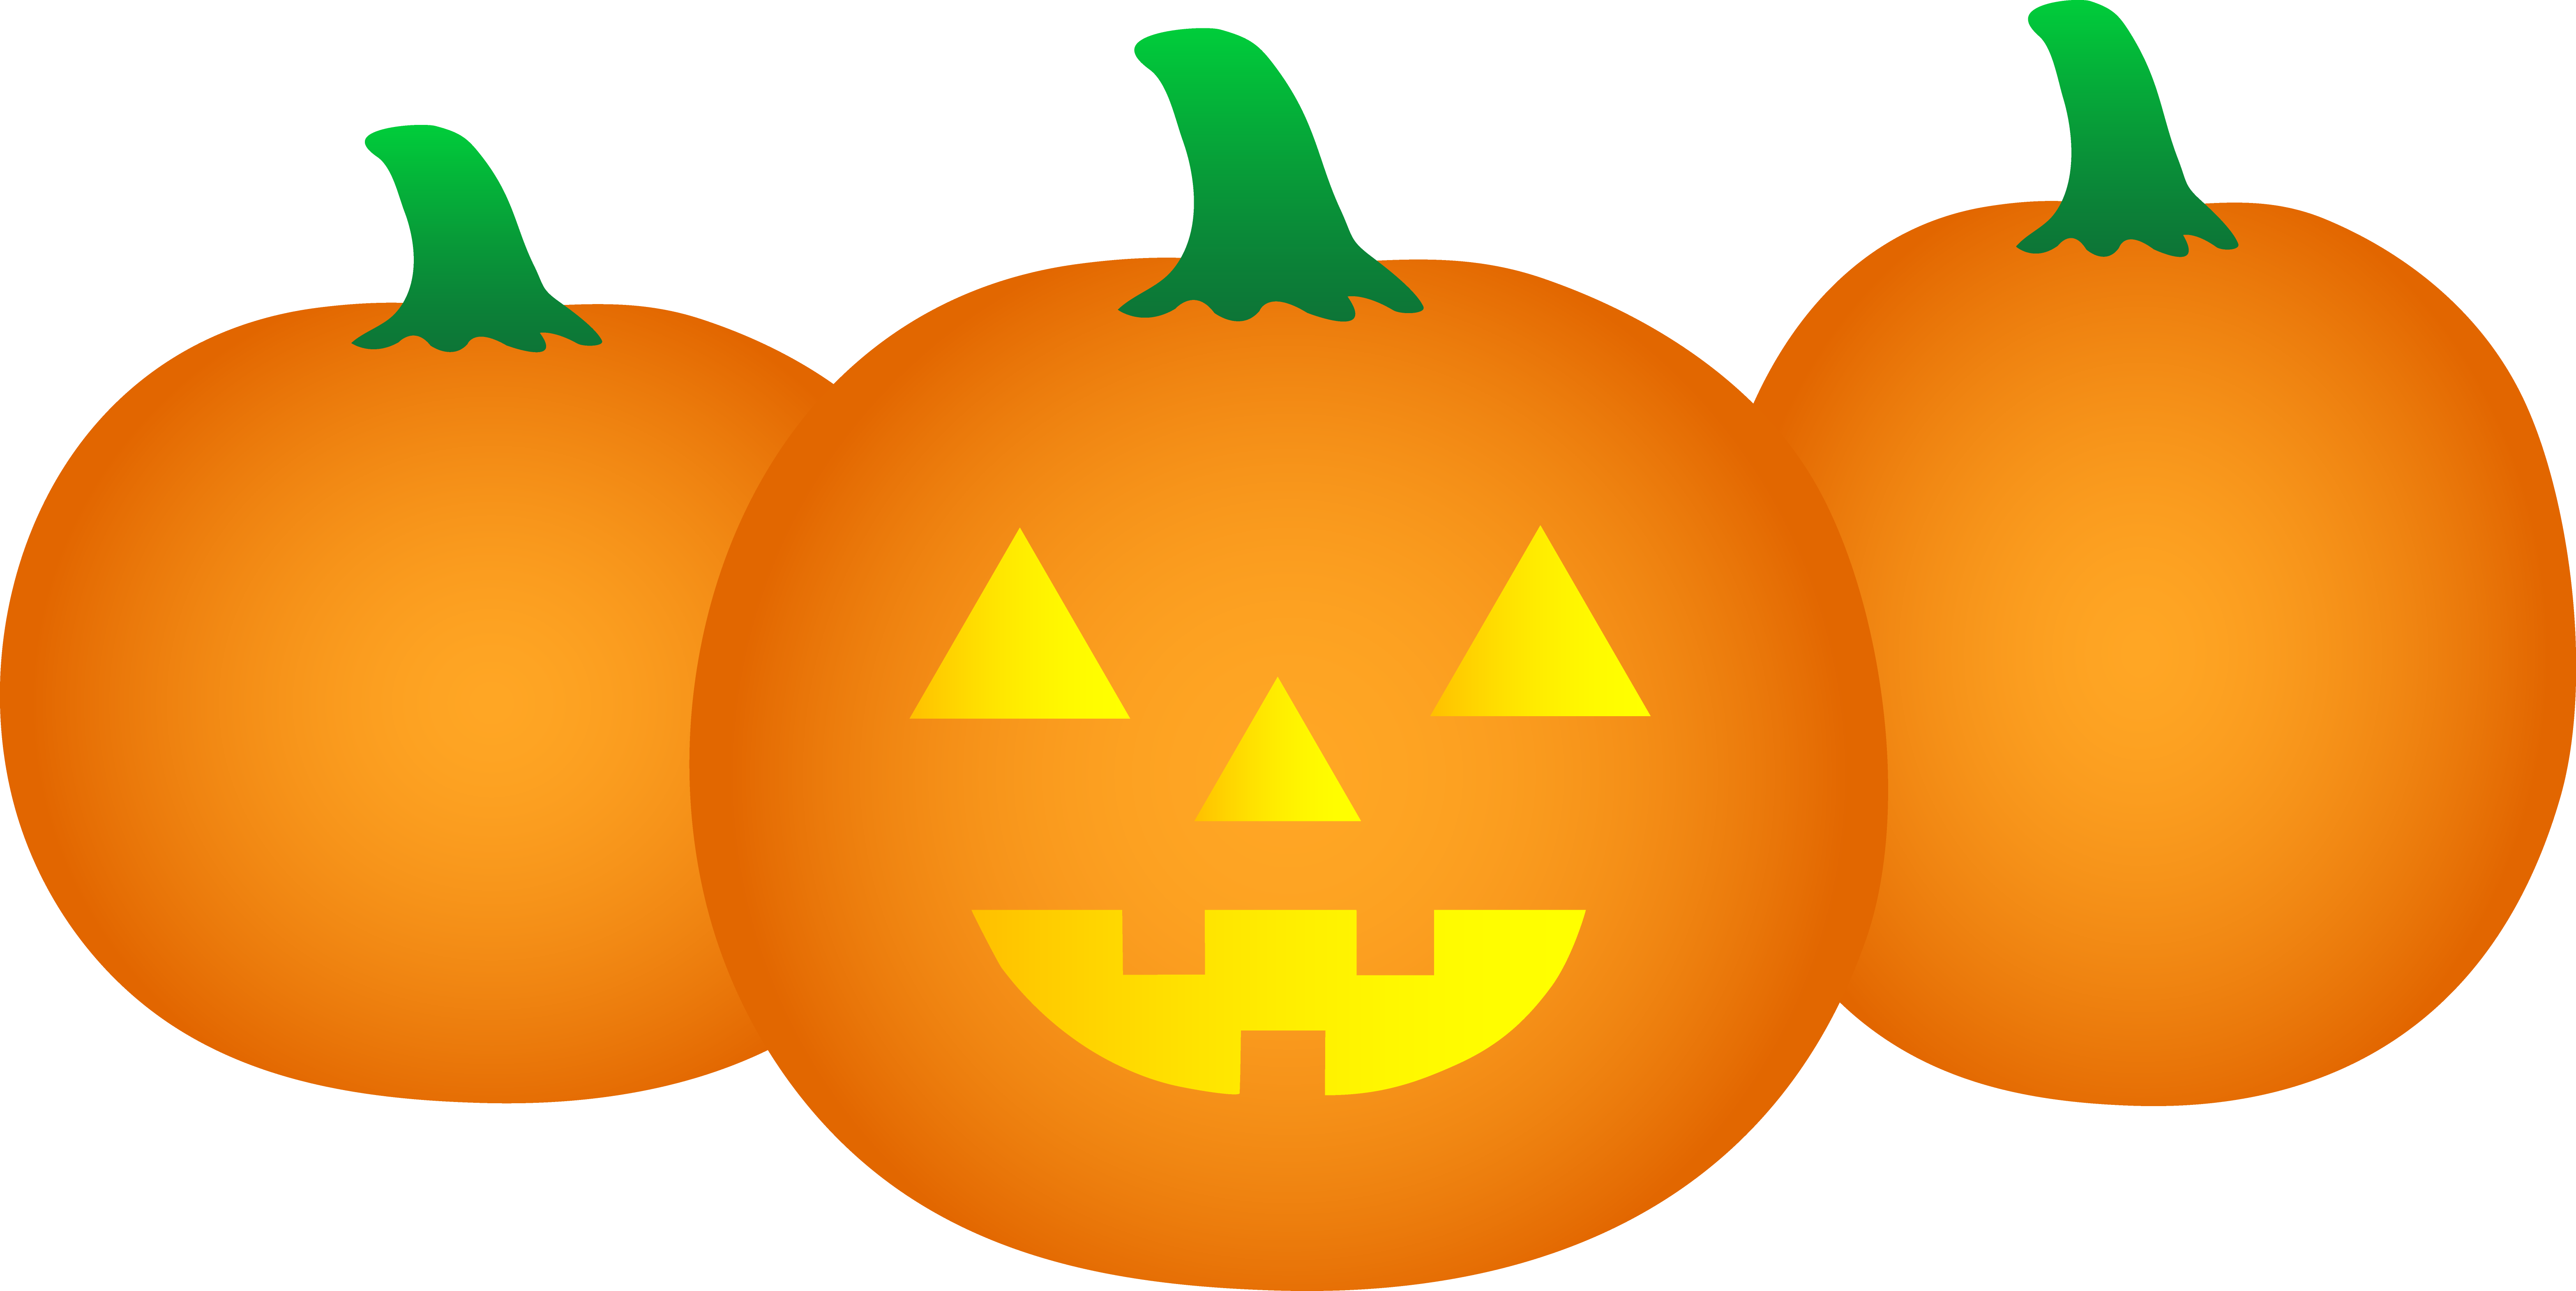 Clip Arts Related To : halloween clip art pumpkin. view all Pumpkins Clip.....